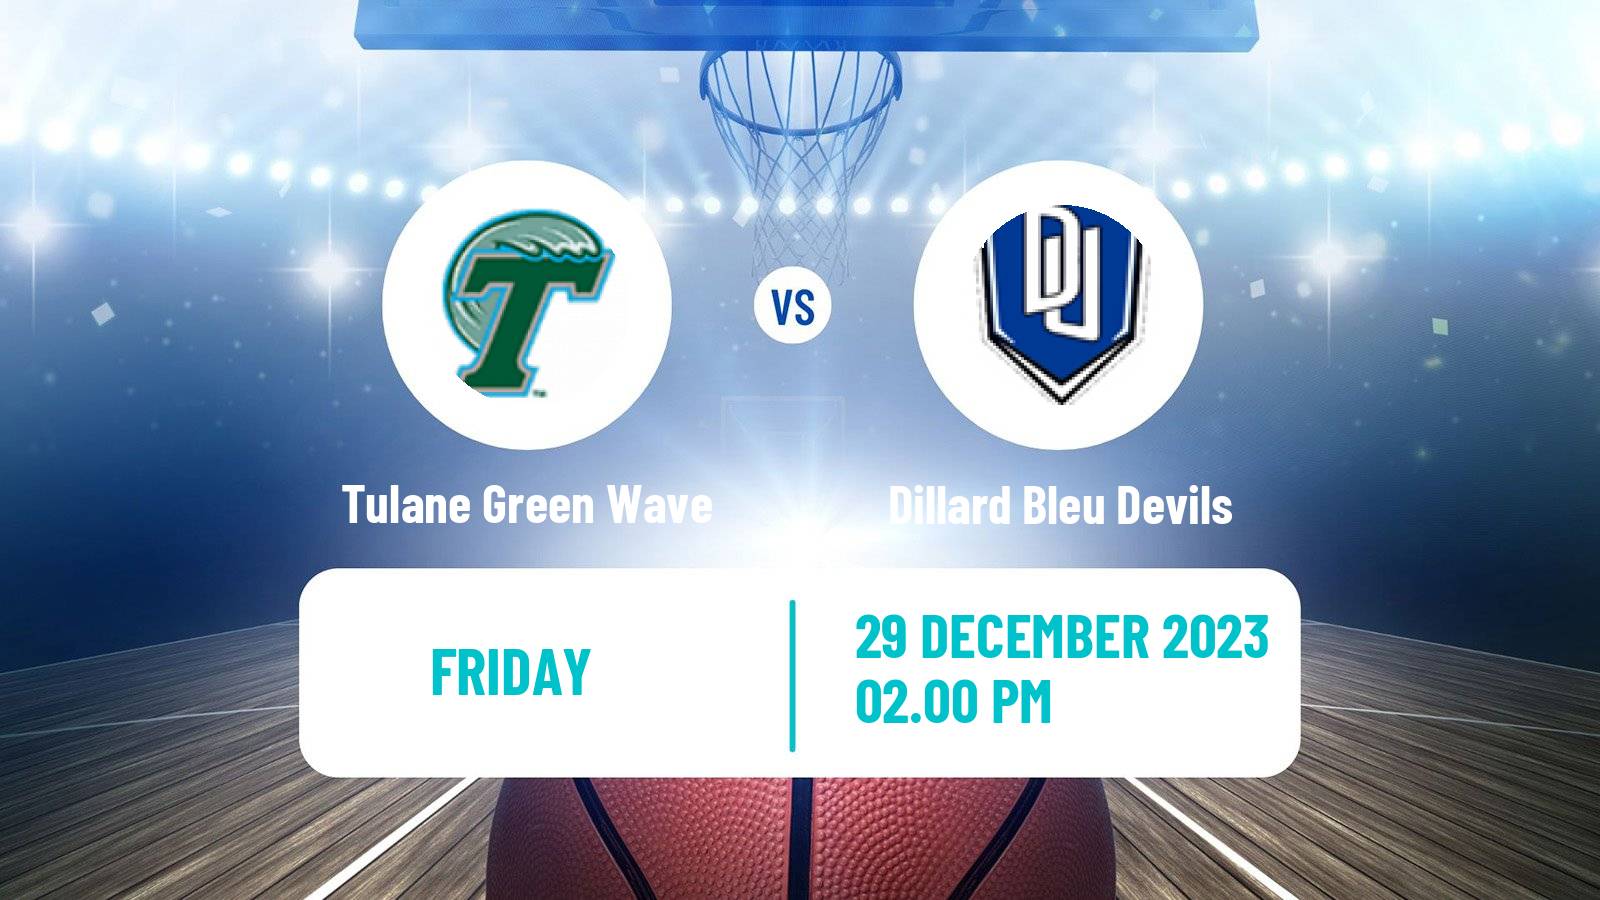 Basketball NCAA College Basketball Tulane Green Wave - Dillard Bleu Devils